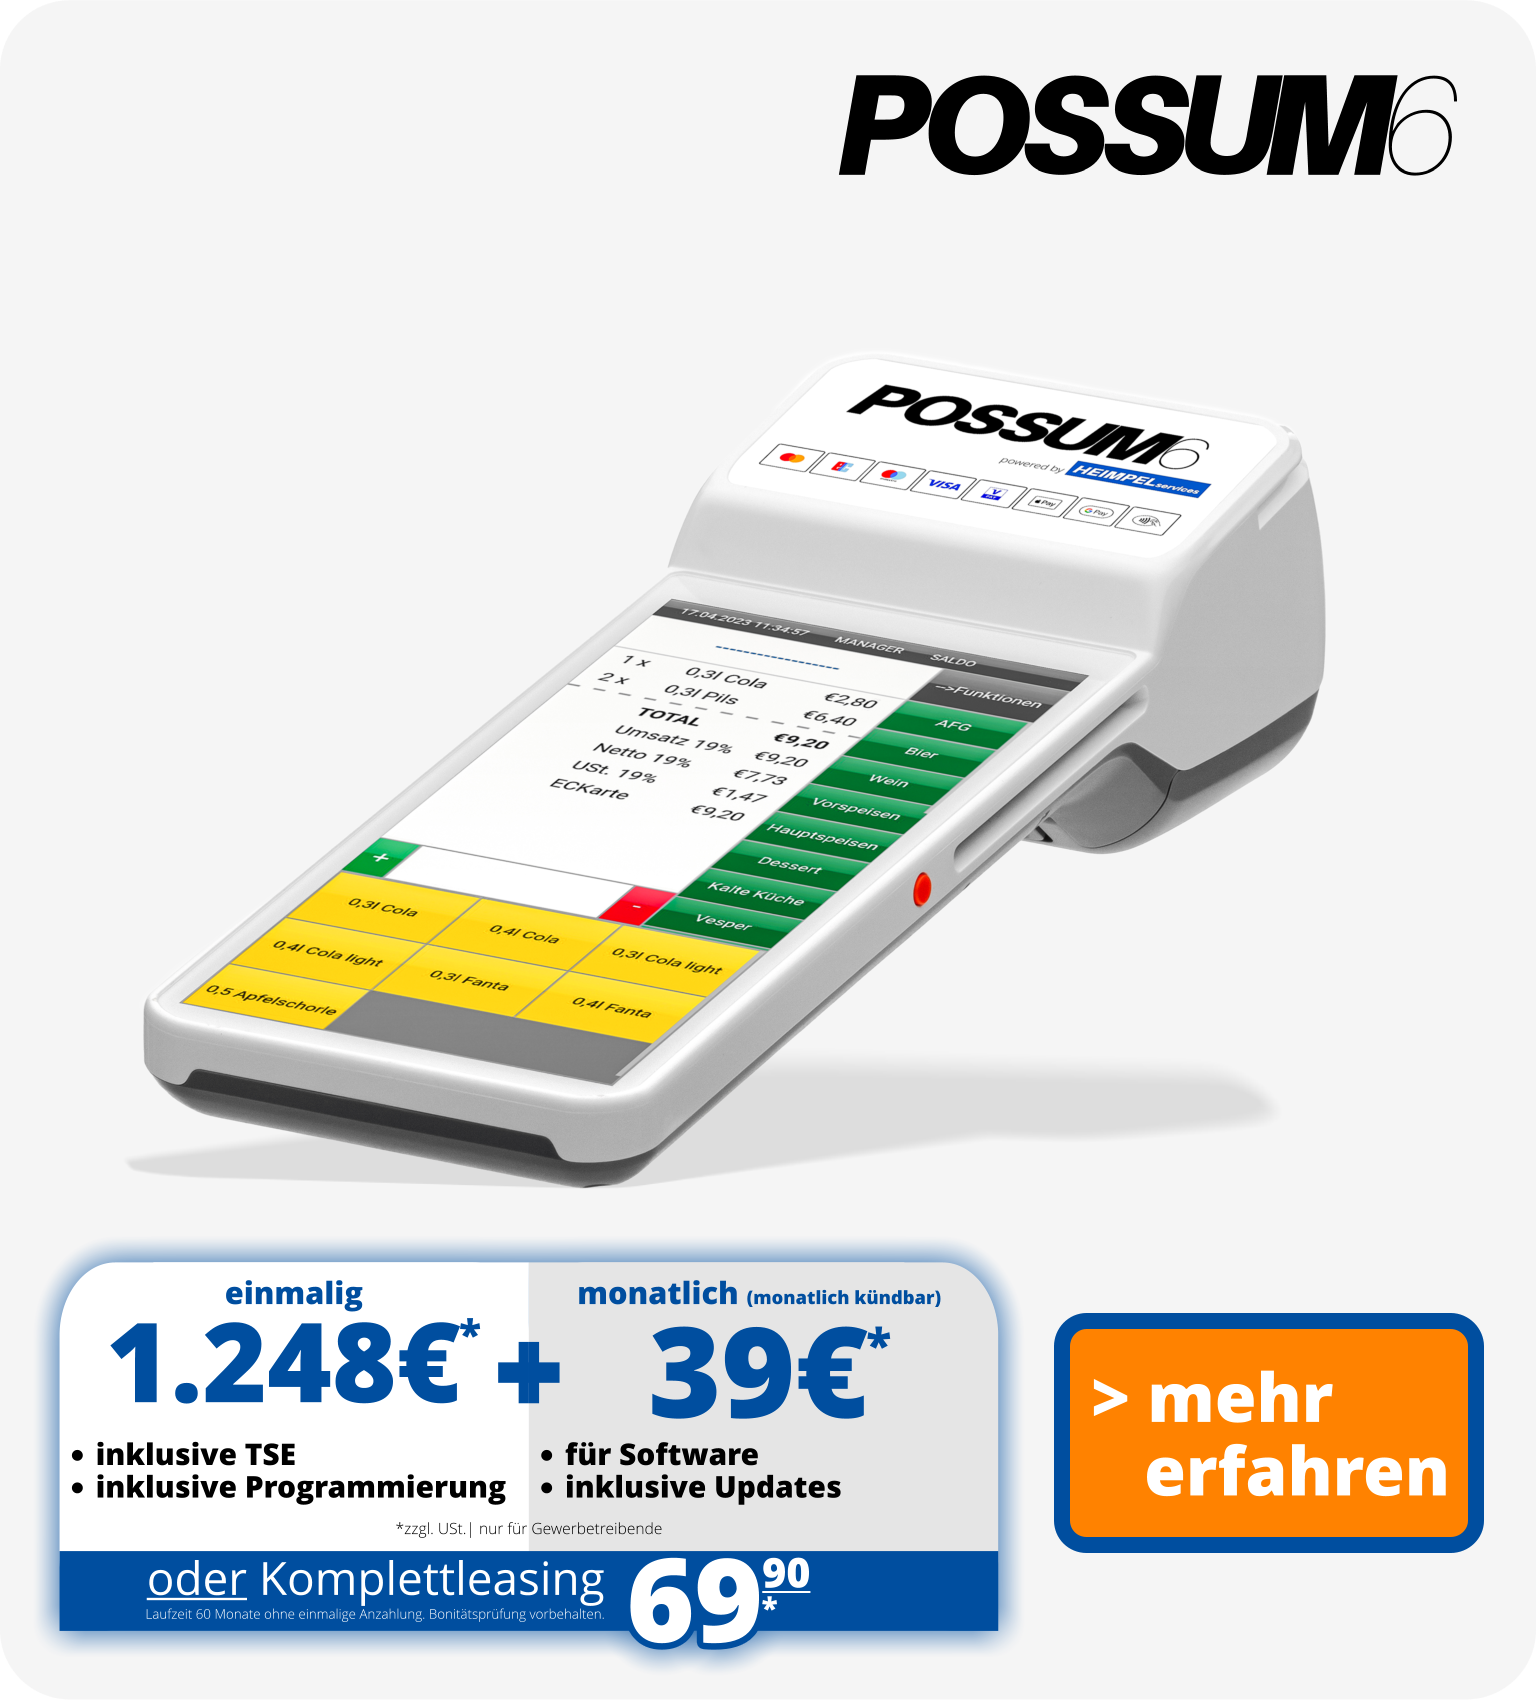 POSSUM6 Preis